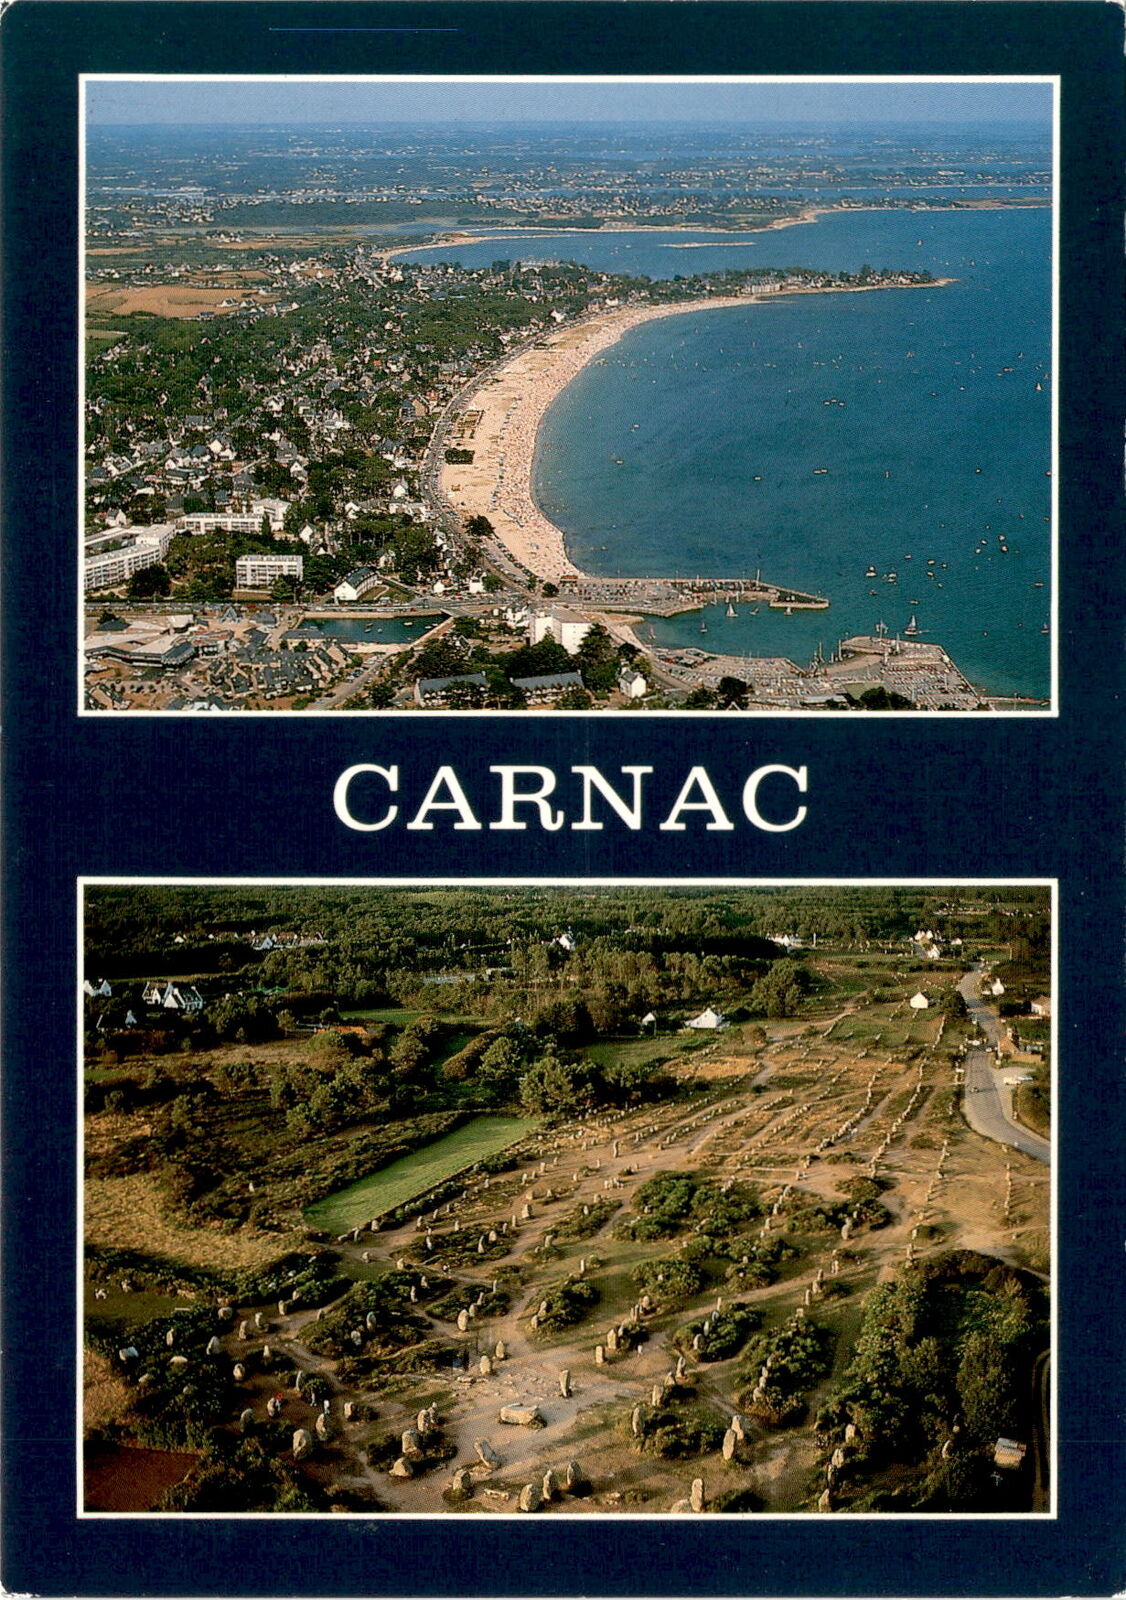 Carnac, Brittany, France, beaches, menhirs, Morbihan department. Postcard